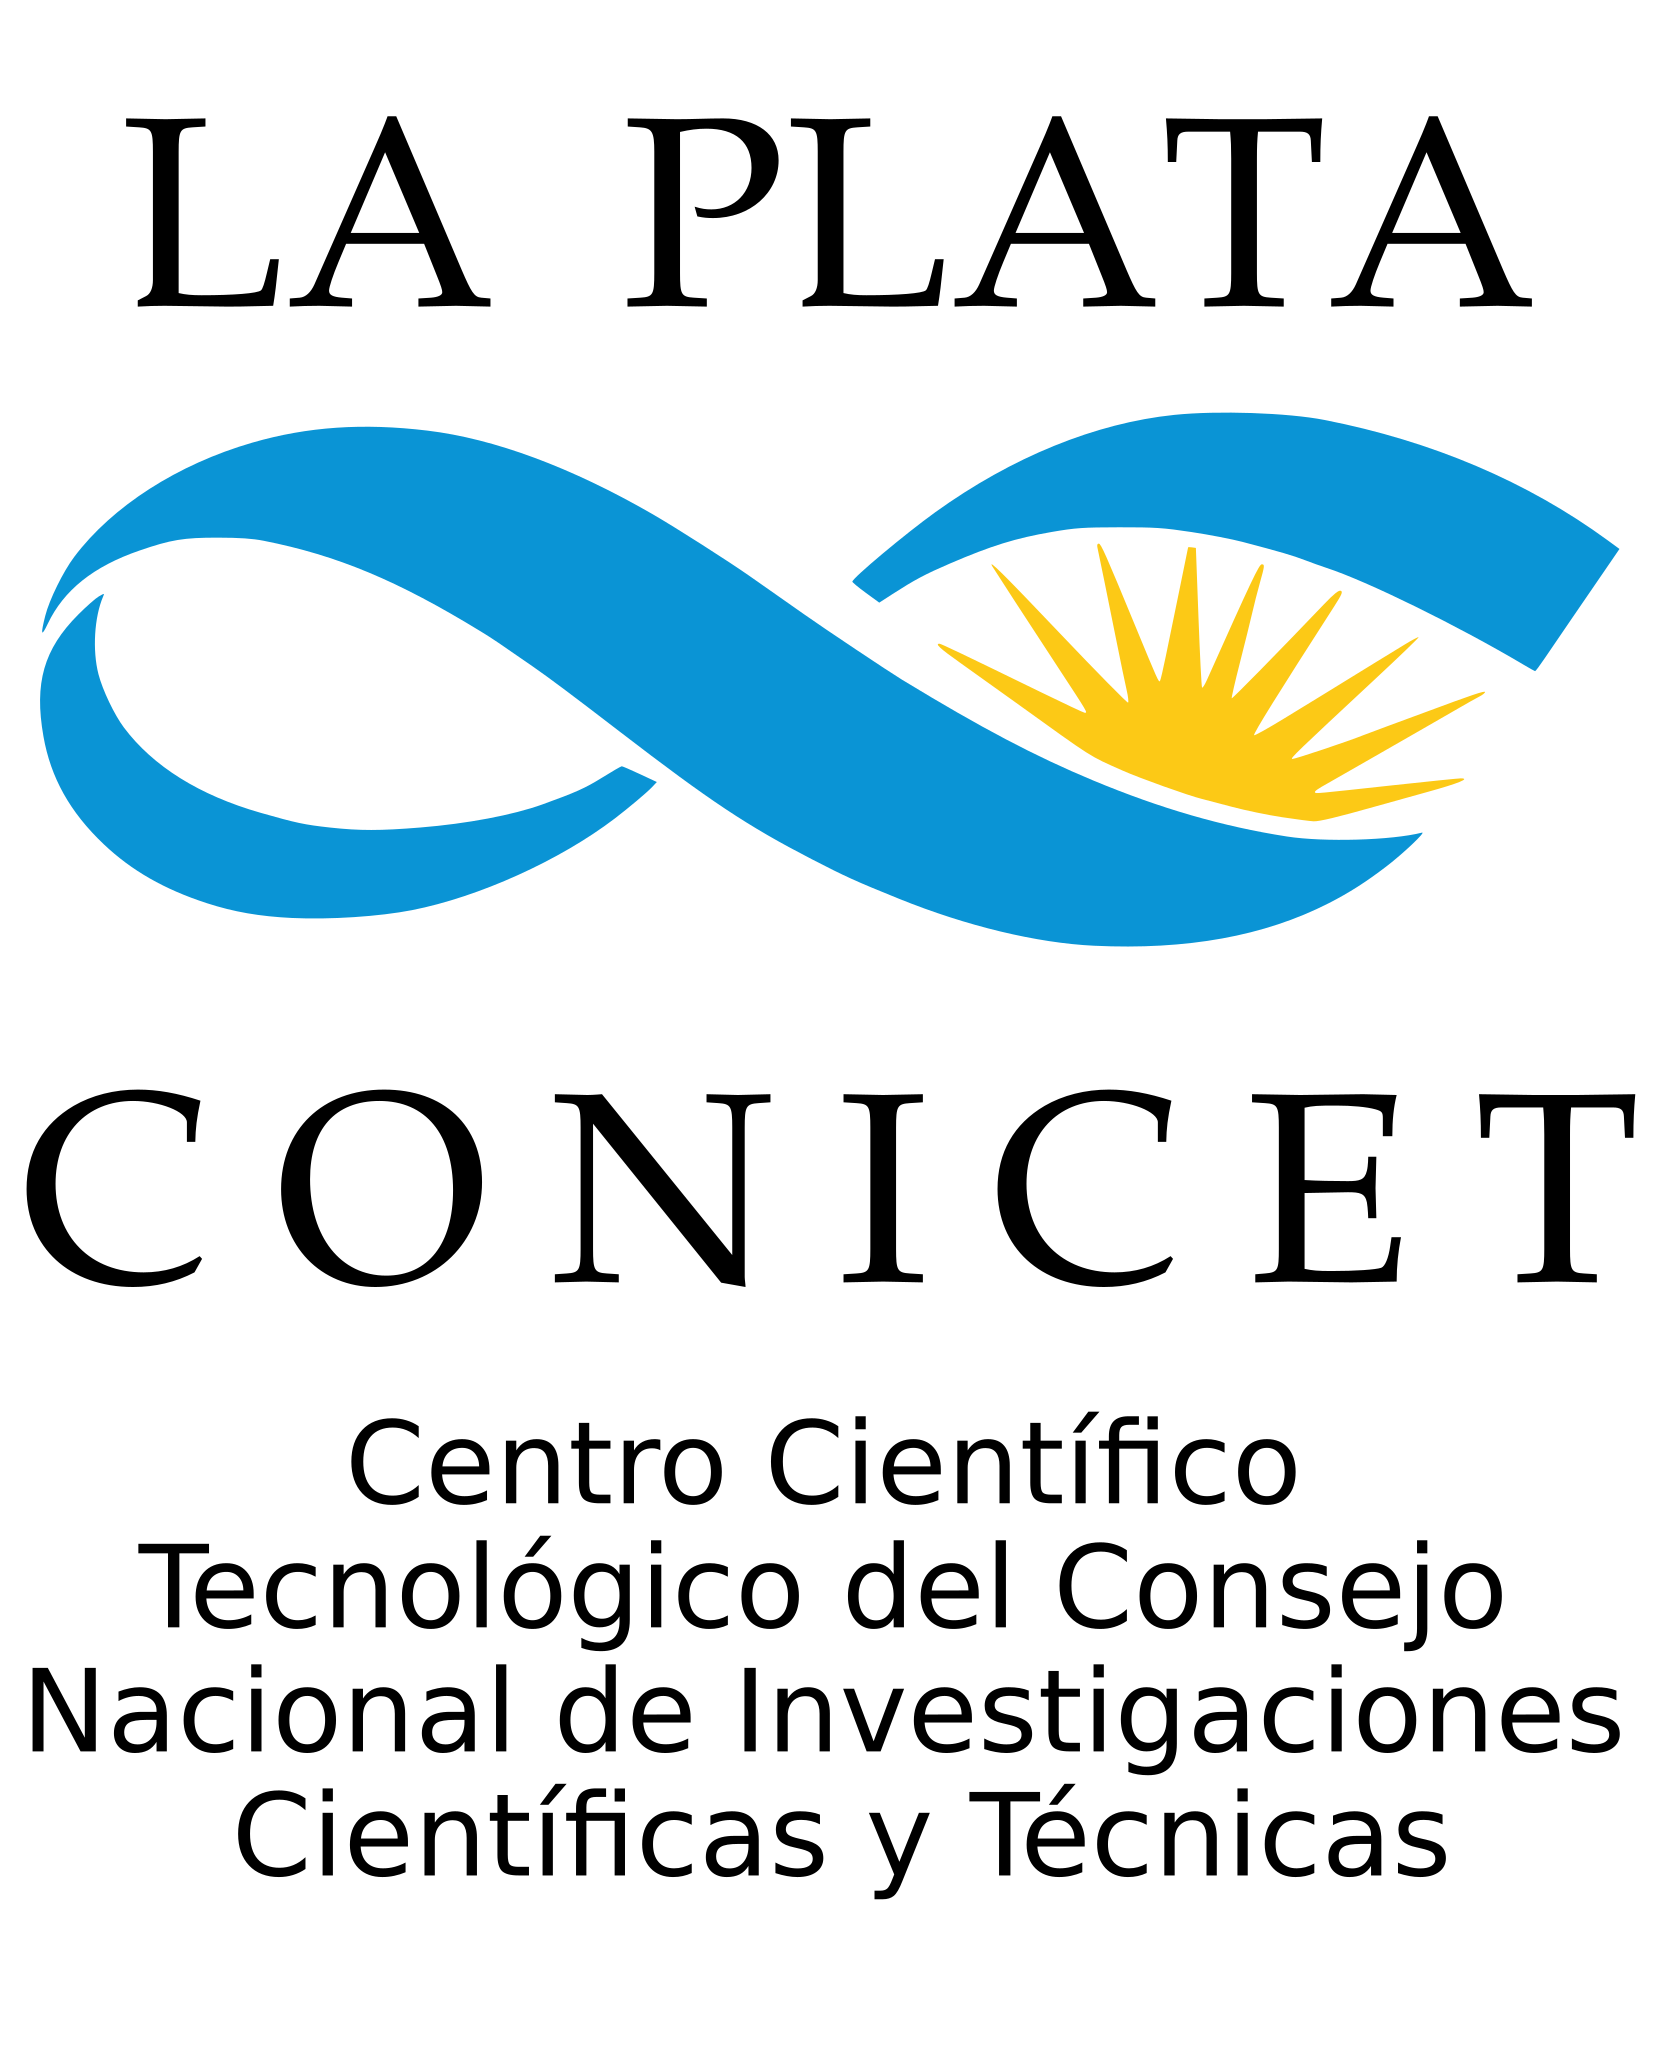 Conicet La Plata